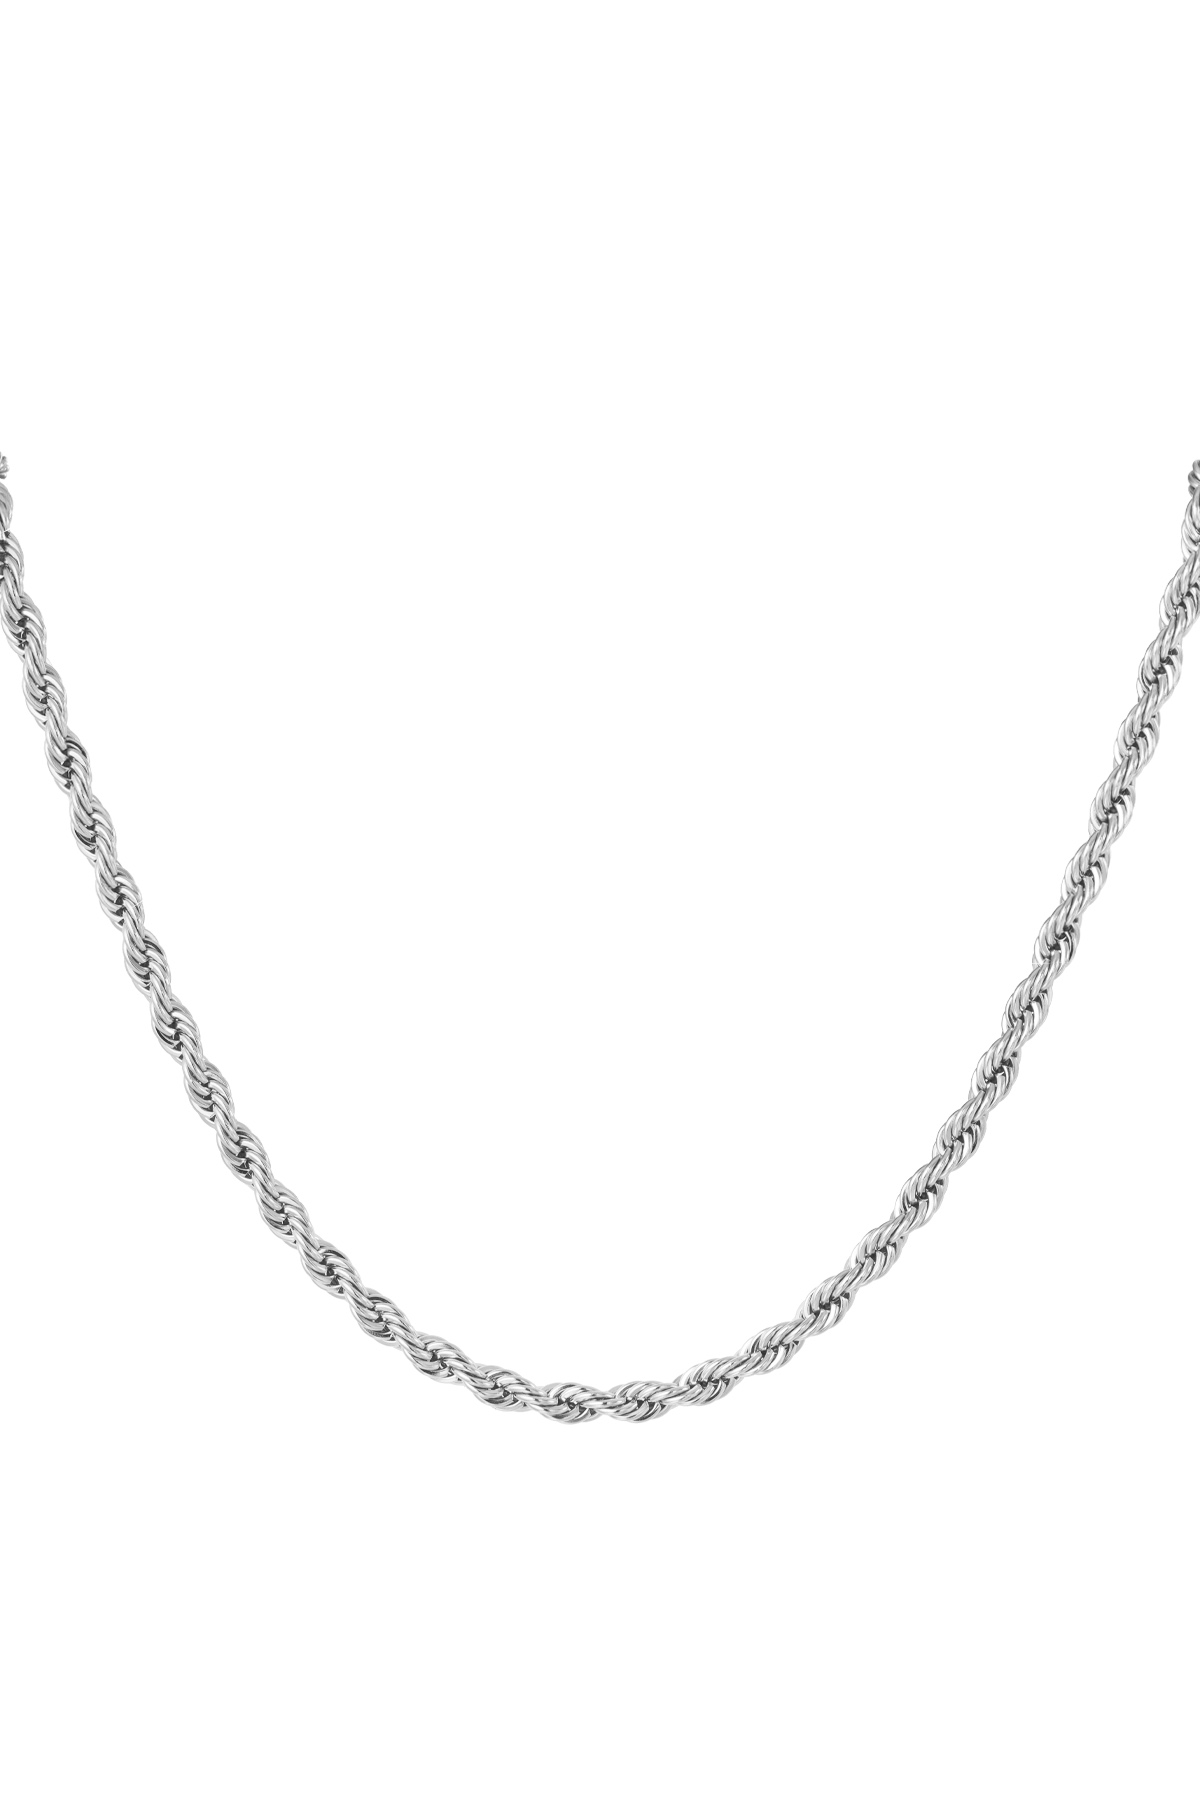 Unisex-Halskette dick gedreht 60cm - Silber - 4,5MM